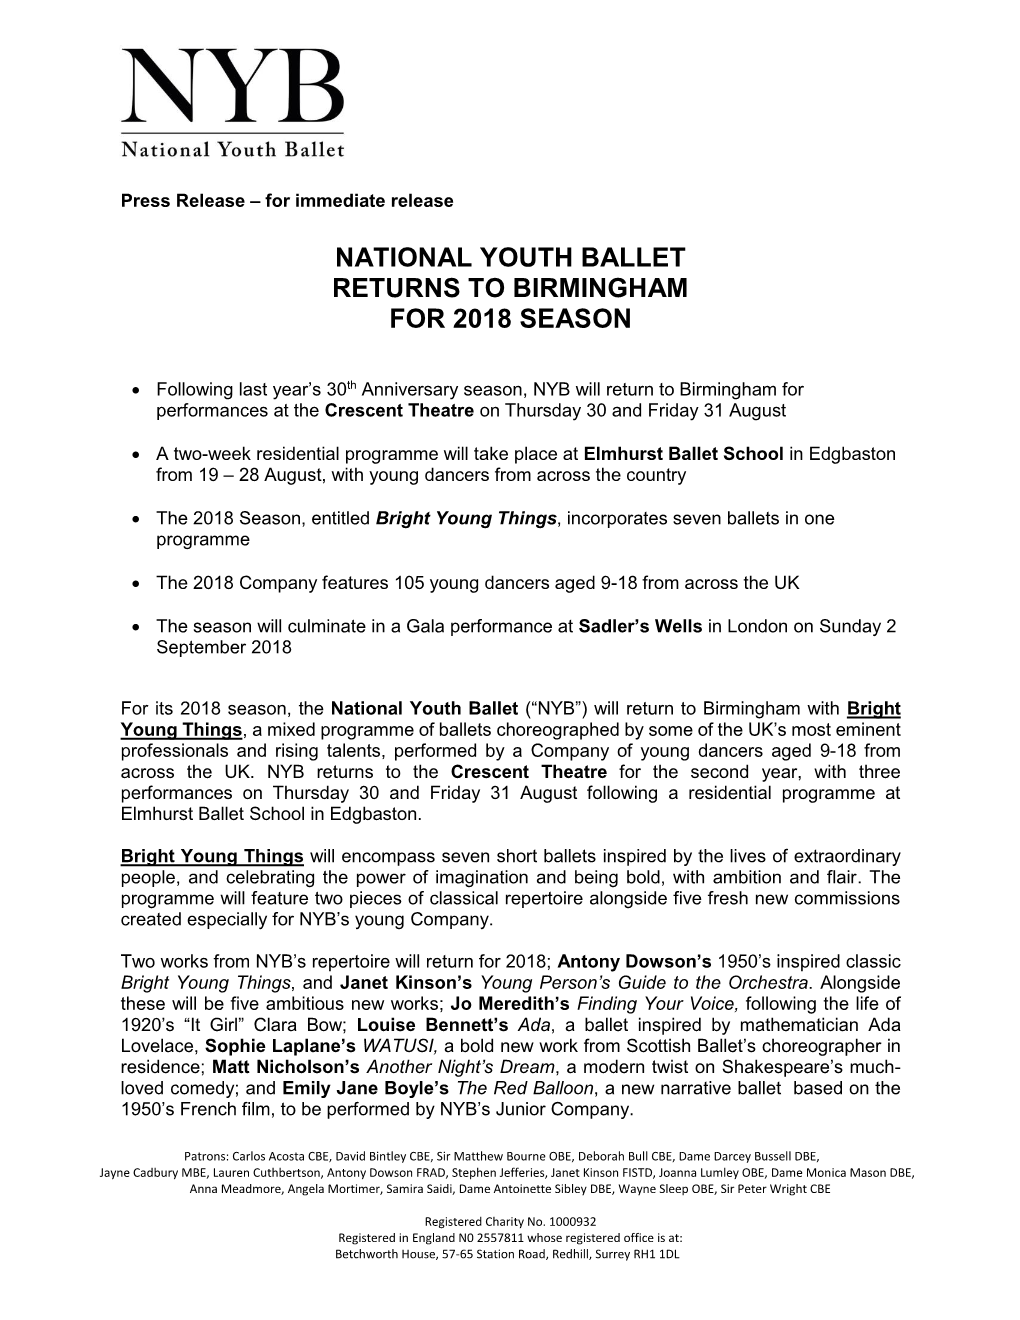 National Youth Ballet Returns to Birmingham for 2018 Season